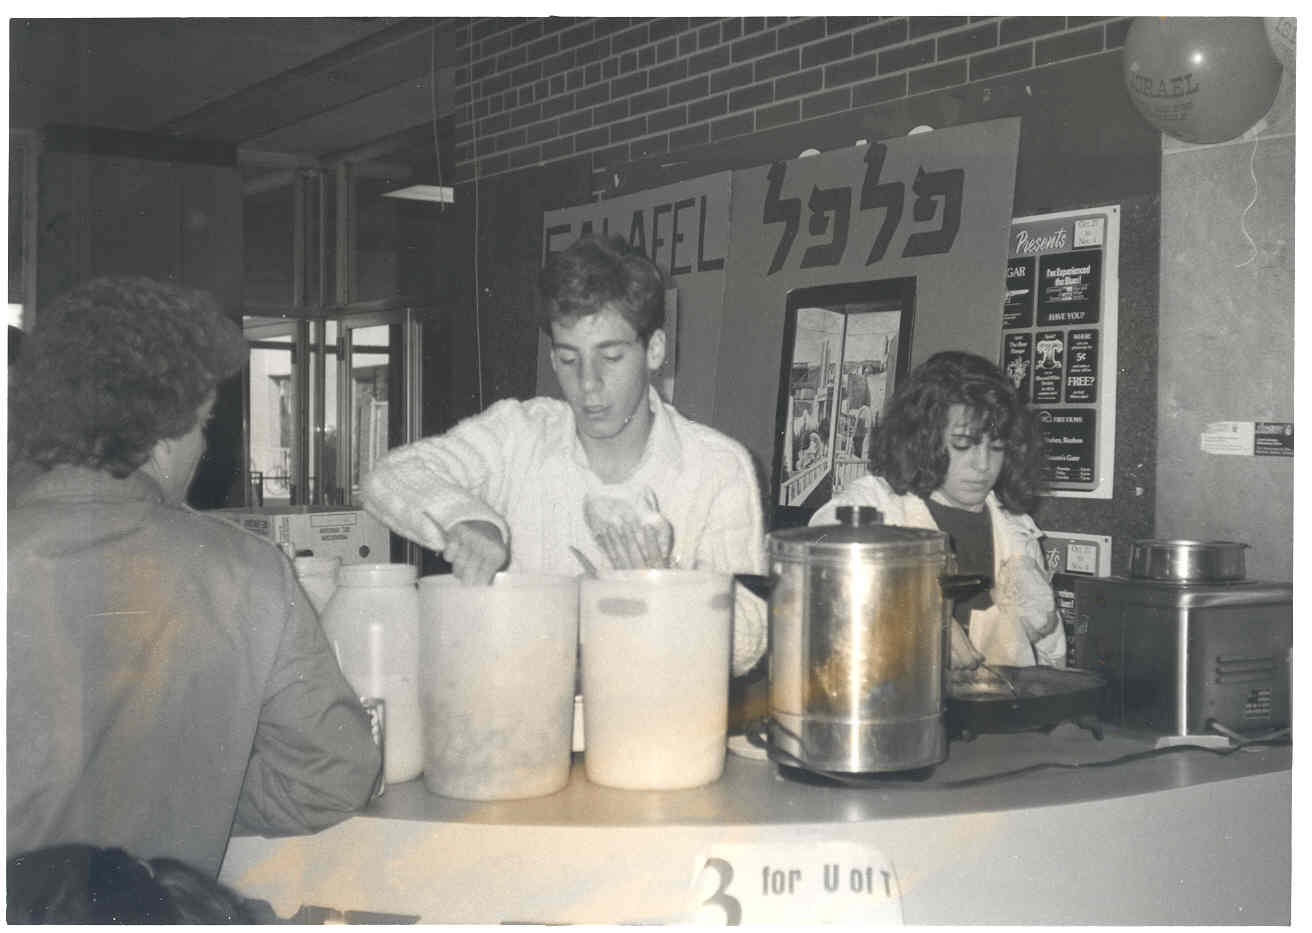 Israeli-style fast food served at Hillel